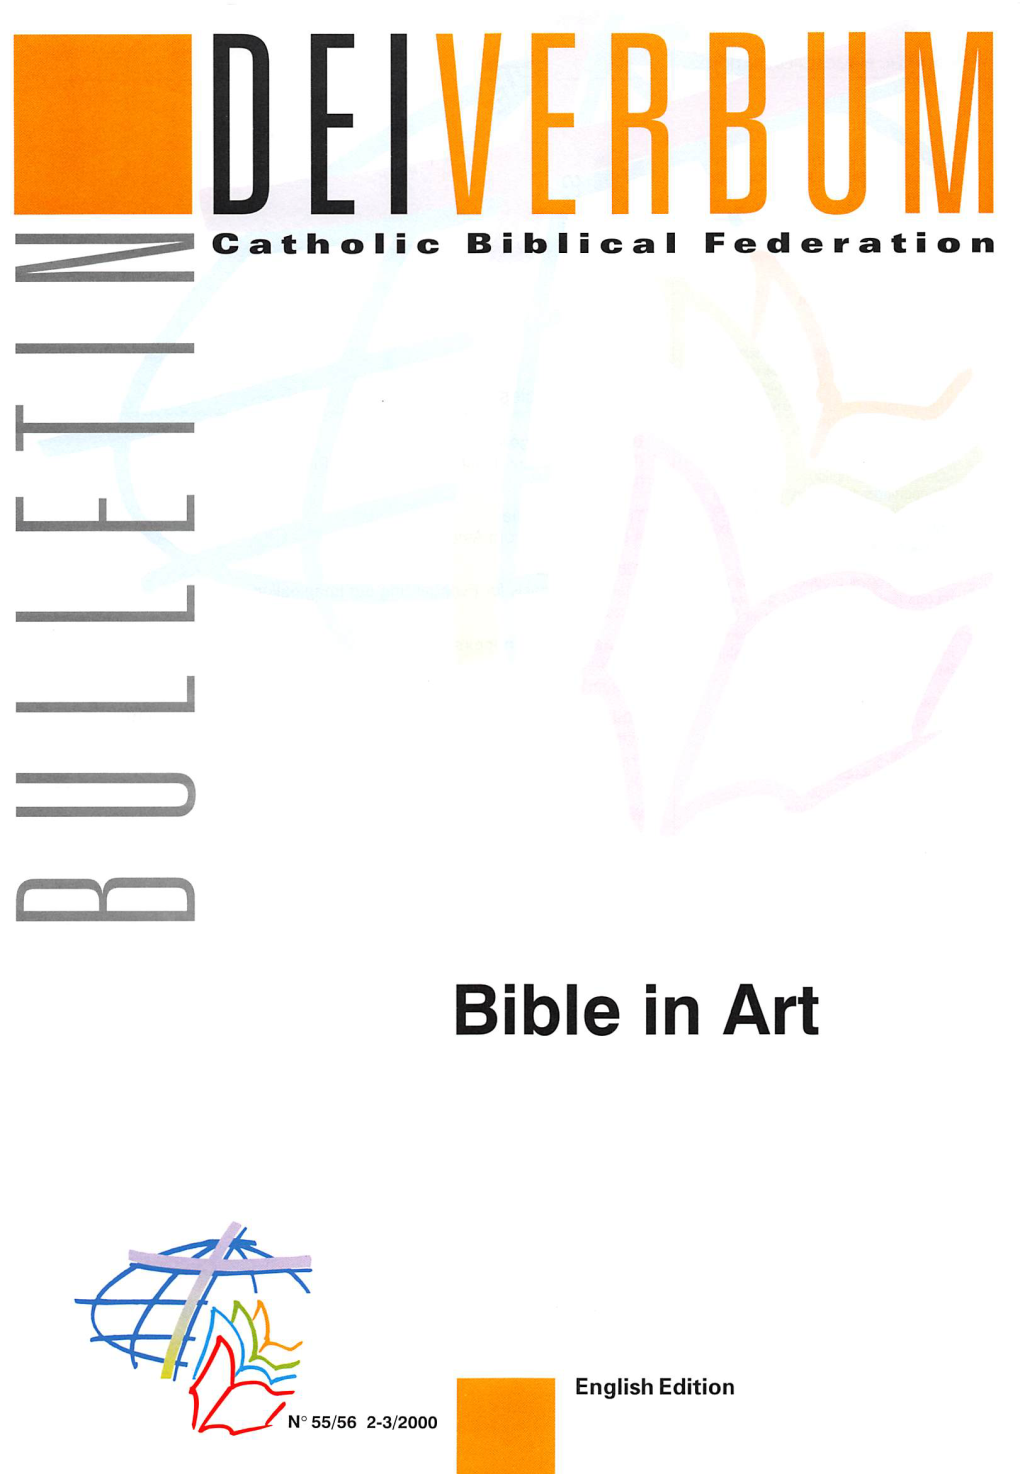 Bible in Art CATHOLIC BIBLICAL FEDERATION